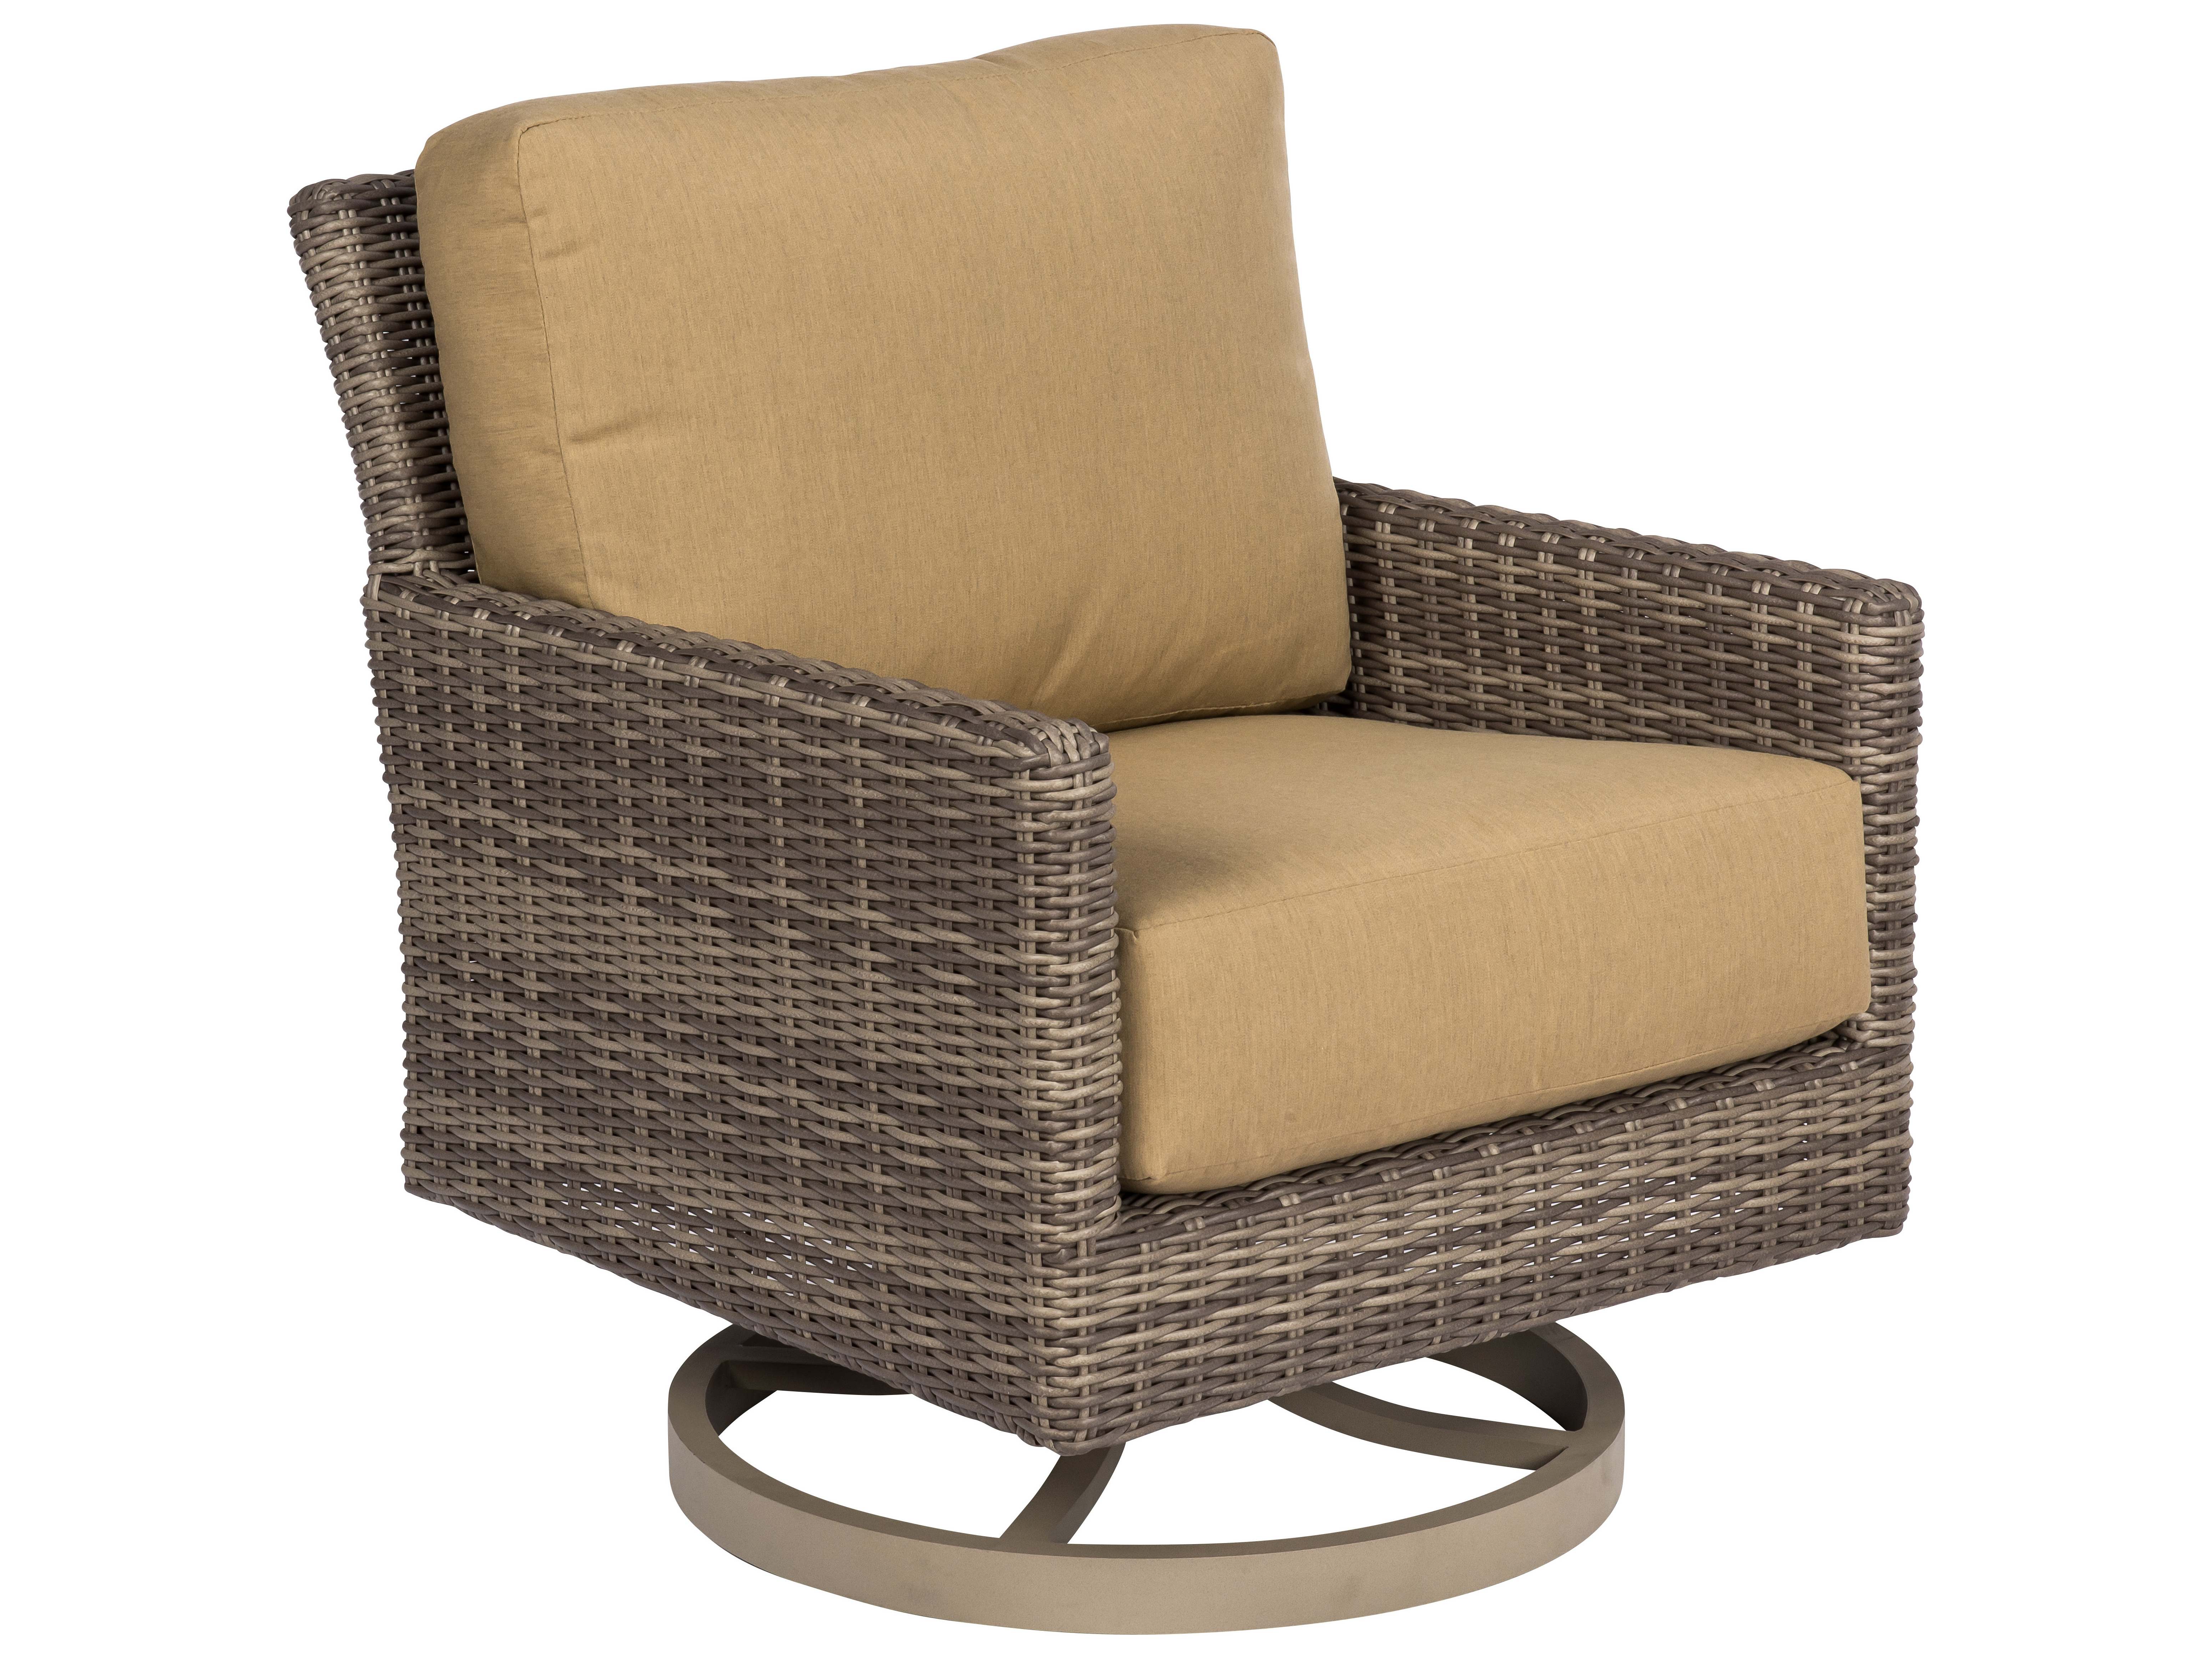 Woodard Belden Recliner Lounge Chair Replacement Cushions